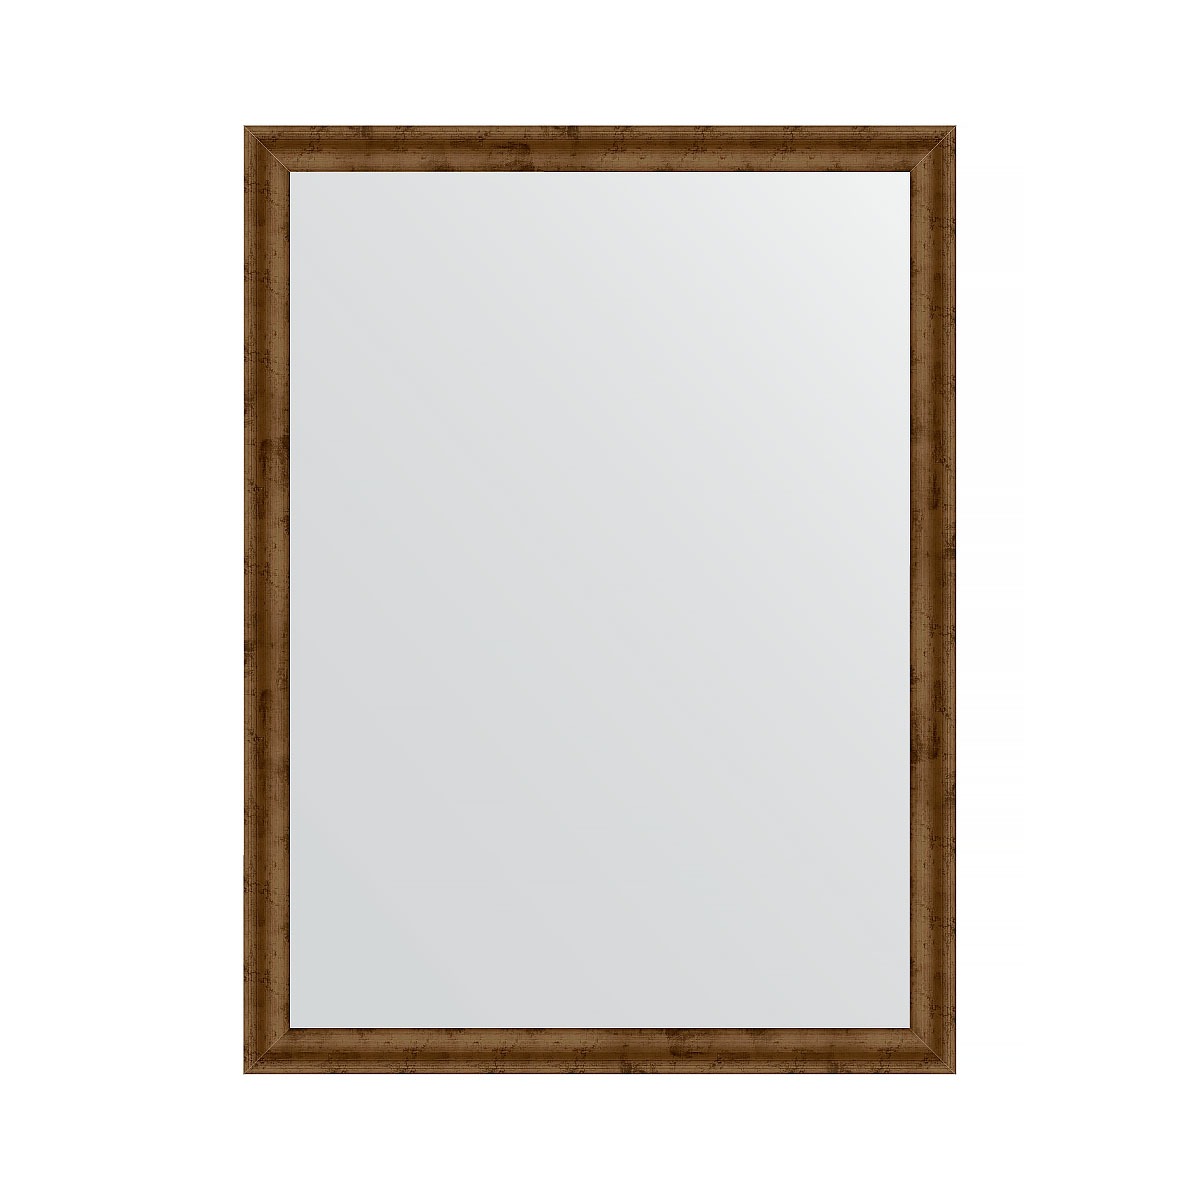 Зеркало в багетной раме Evoform красная бронза 37 мм 60х80 см зеркало с фацетом в багетной раме evoform ардеко 81 мм 75х105 см